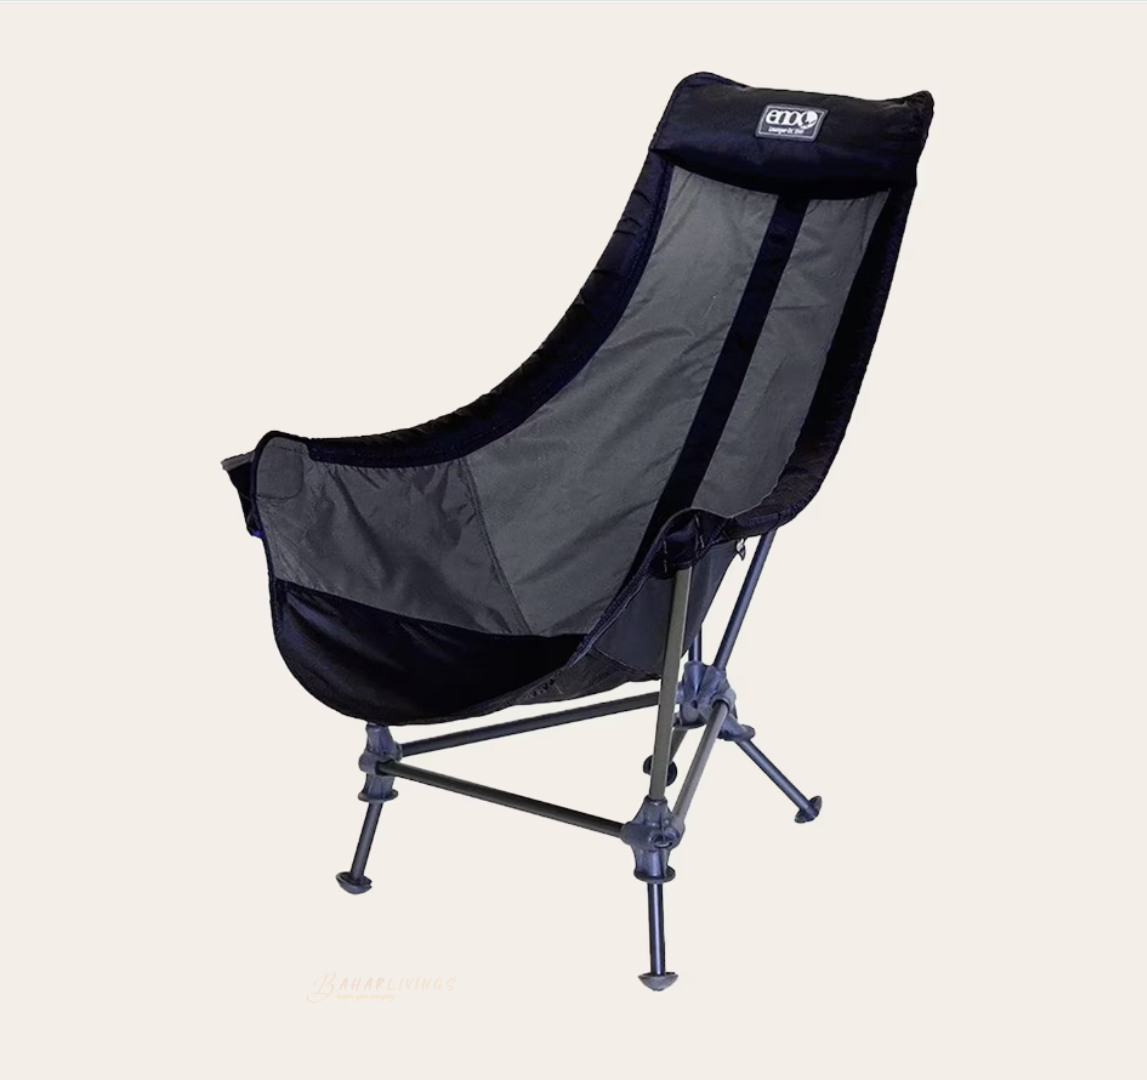 Hammock Haven: Eno Lounger DL Chair - Best Hammock